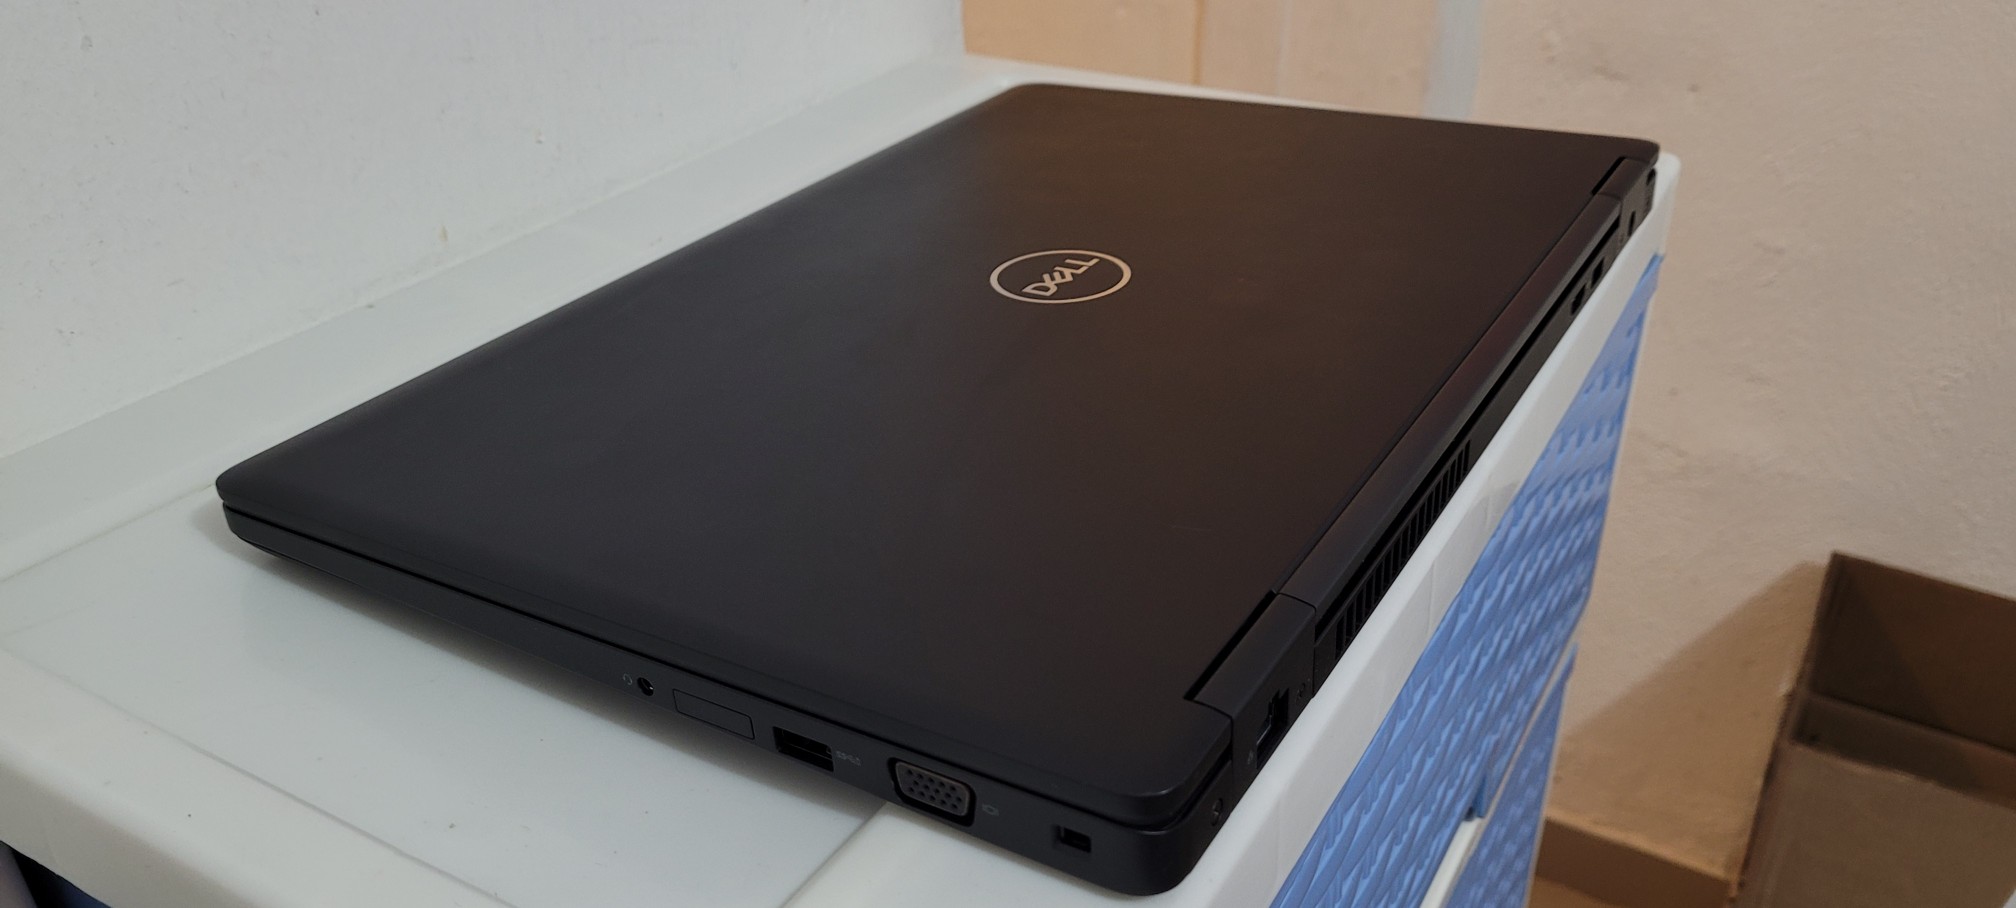 computadoras y laptops - Laptop Dell 5590 17 Pulg Core i5 8va Gen Ram 16gb ddr4 Disco 512gb SSD Video 8gb 2